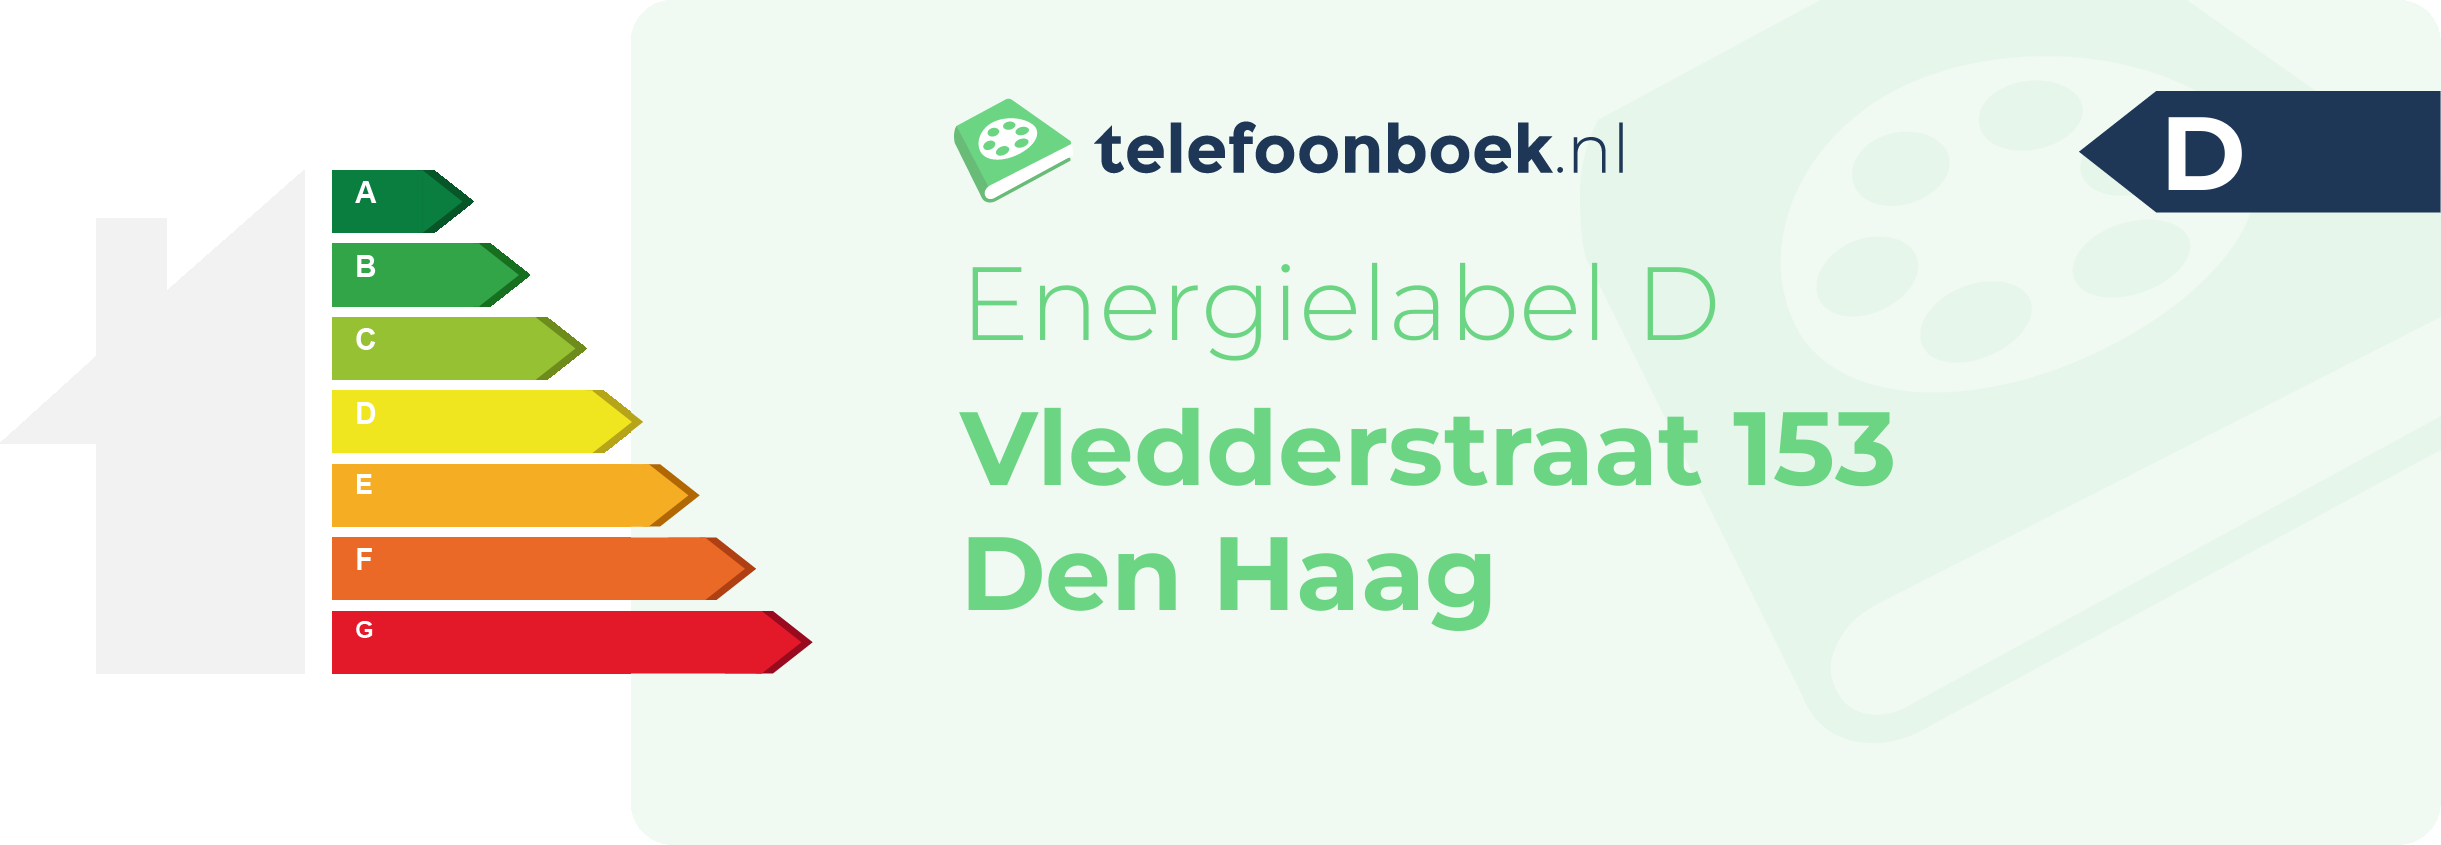 Energielabel Vledderstraat 153 Den Haag